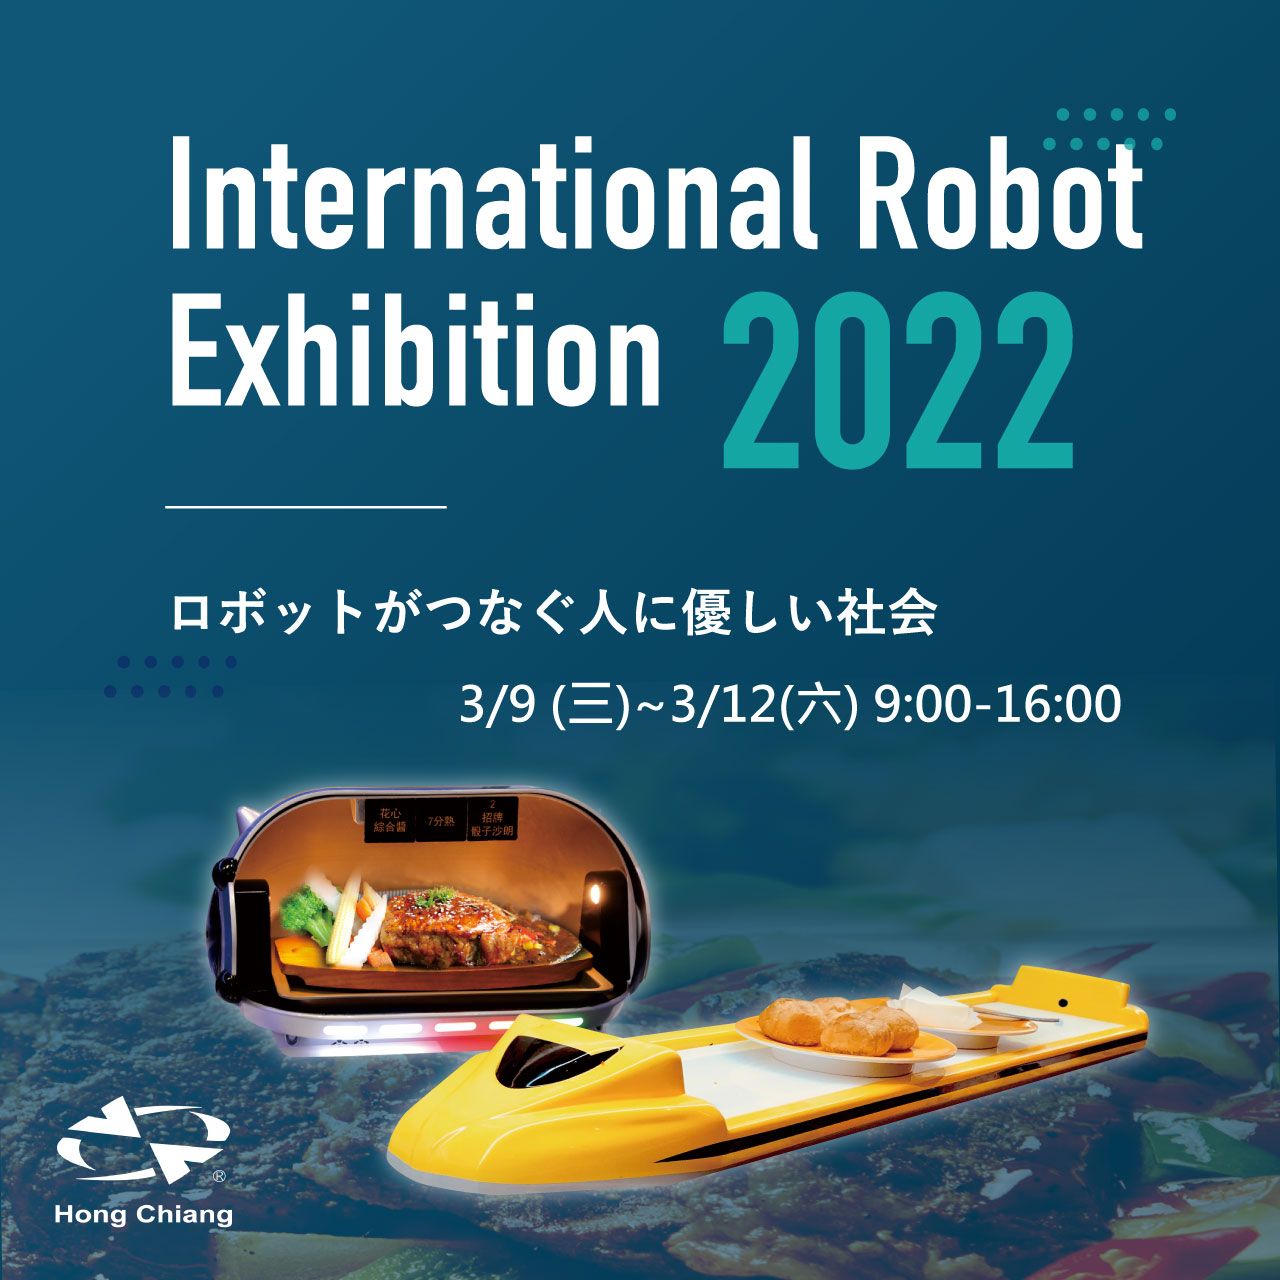 2022 iREX externe tentoonstelling